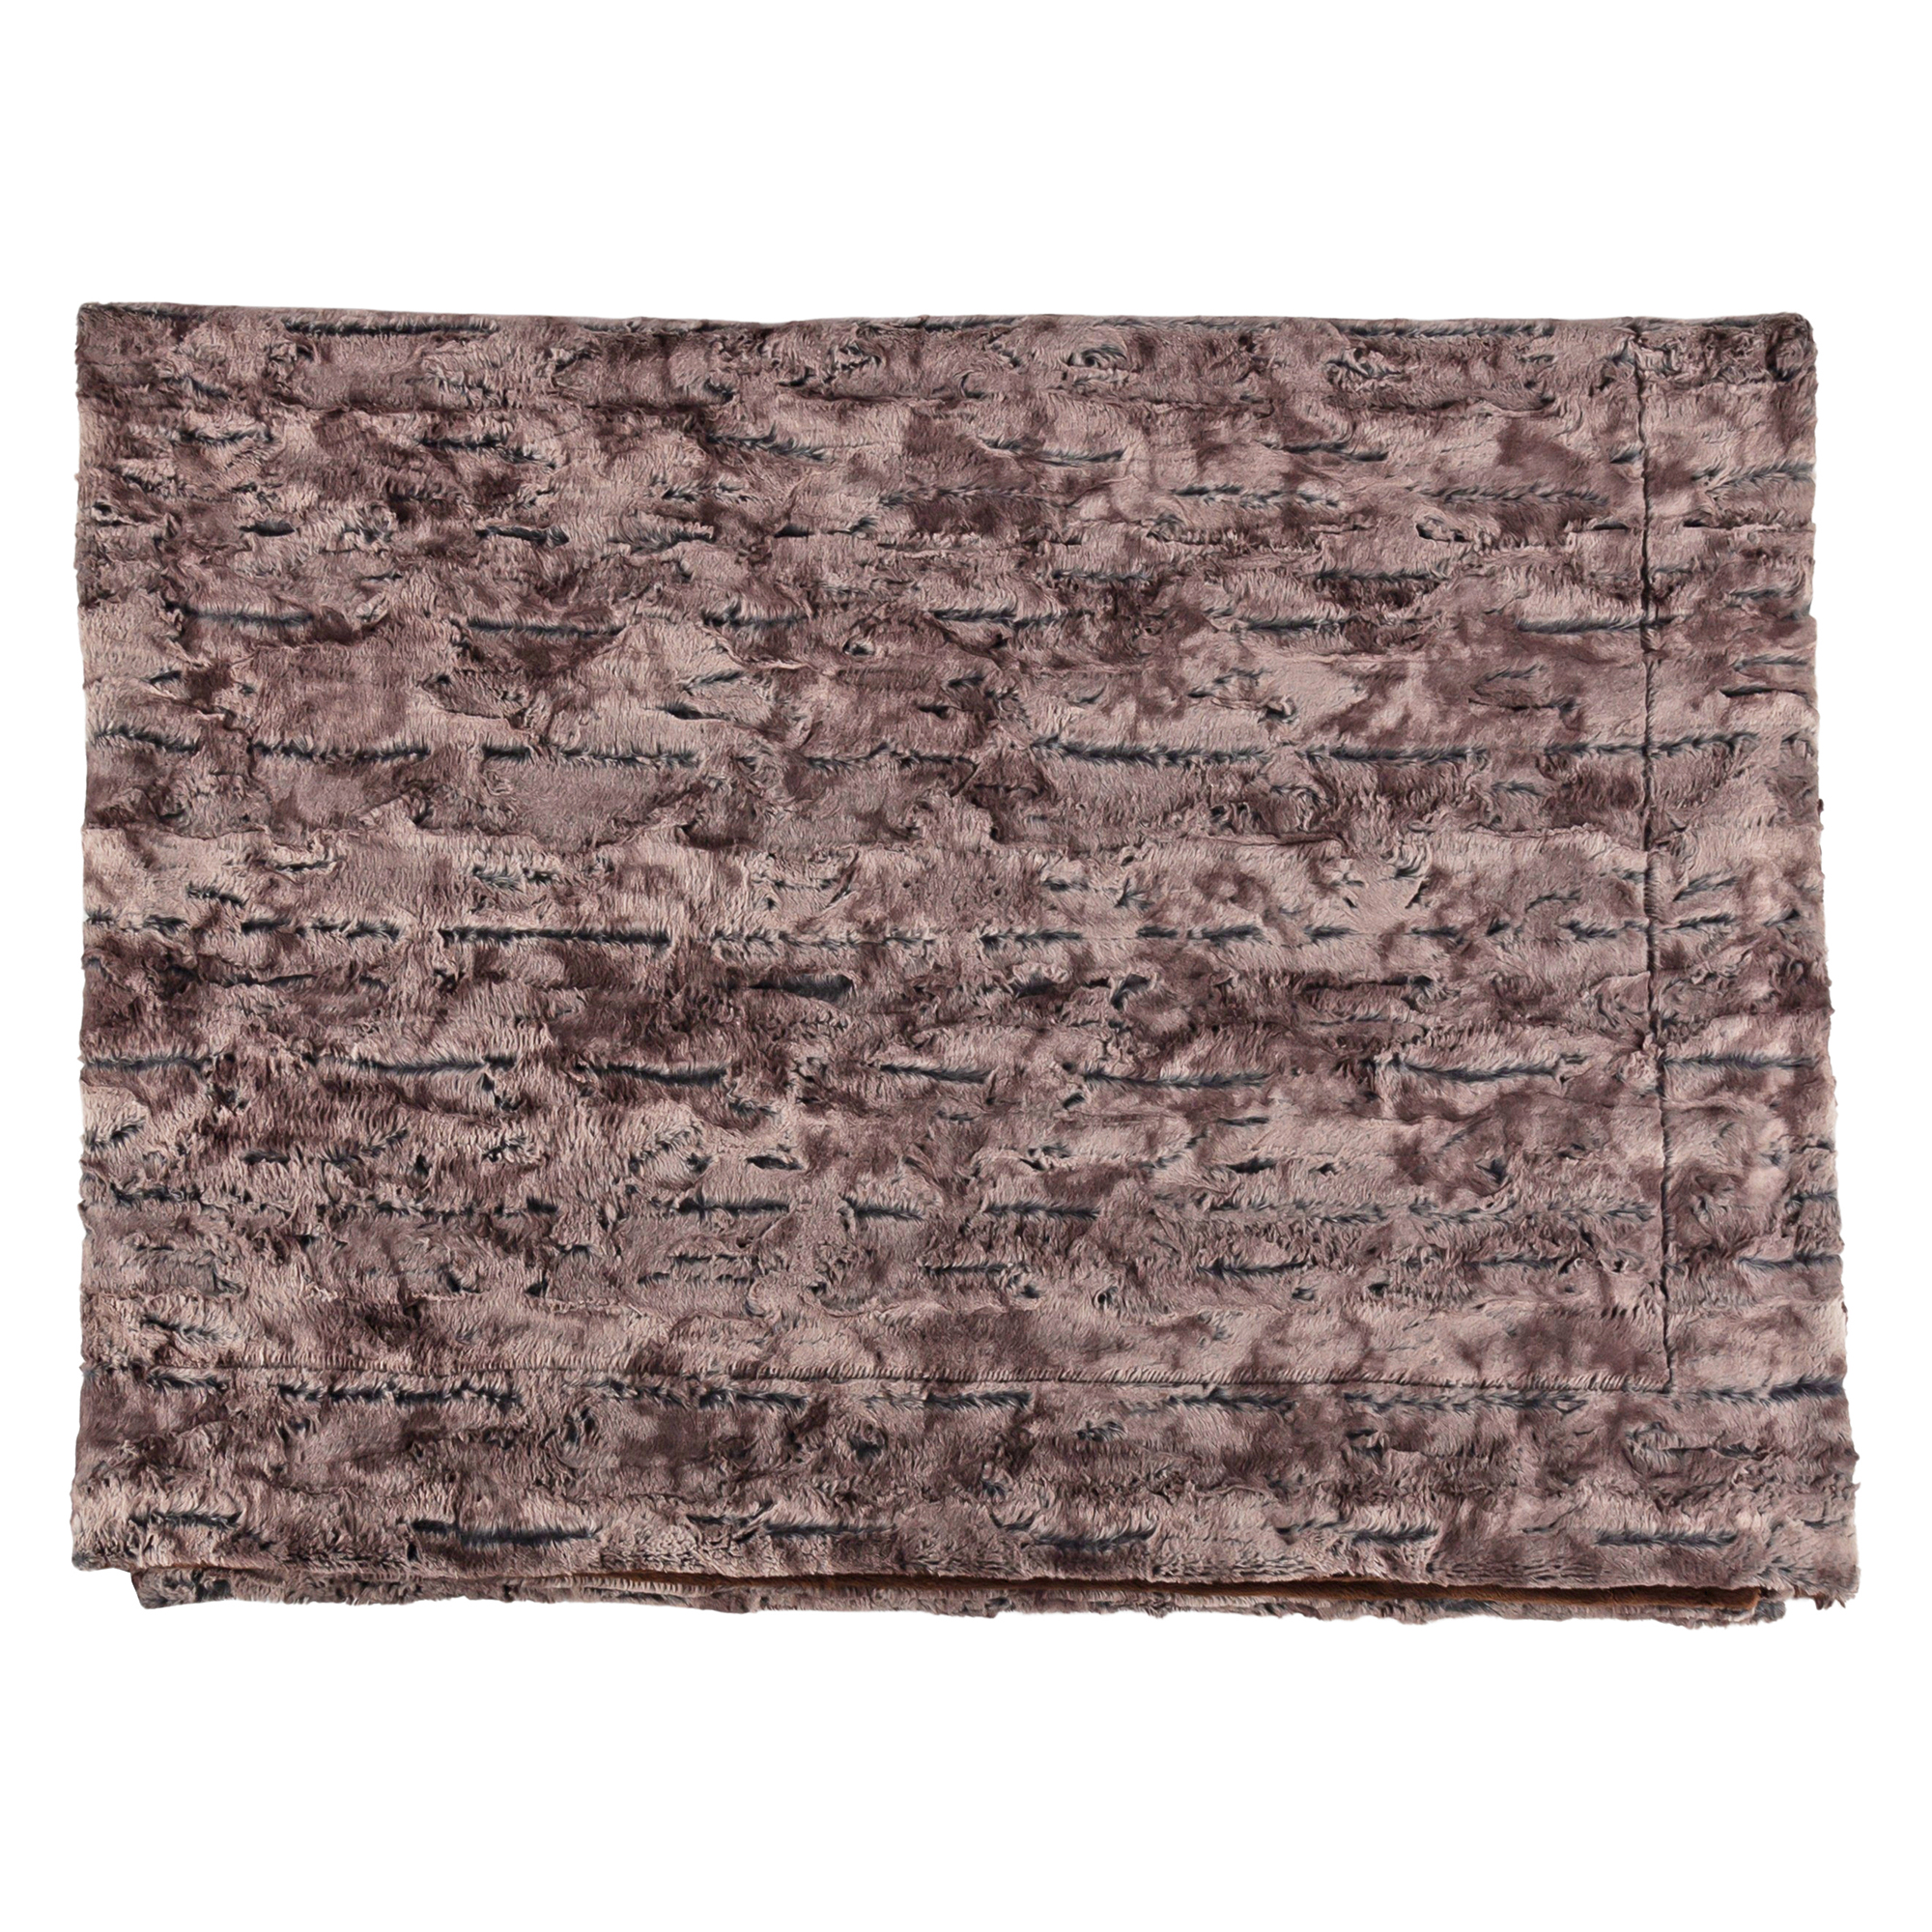 Design plush throw blanket brown/grey, velour backing